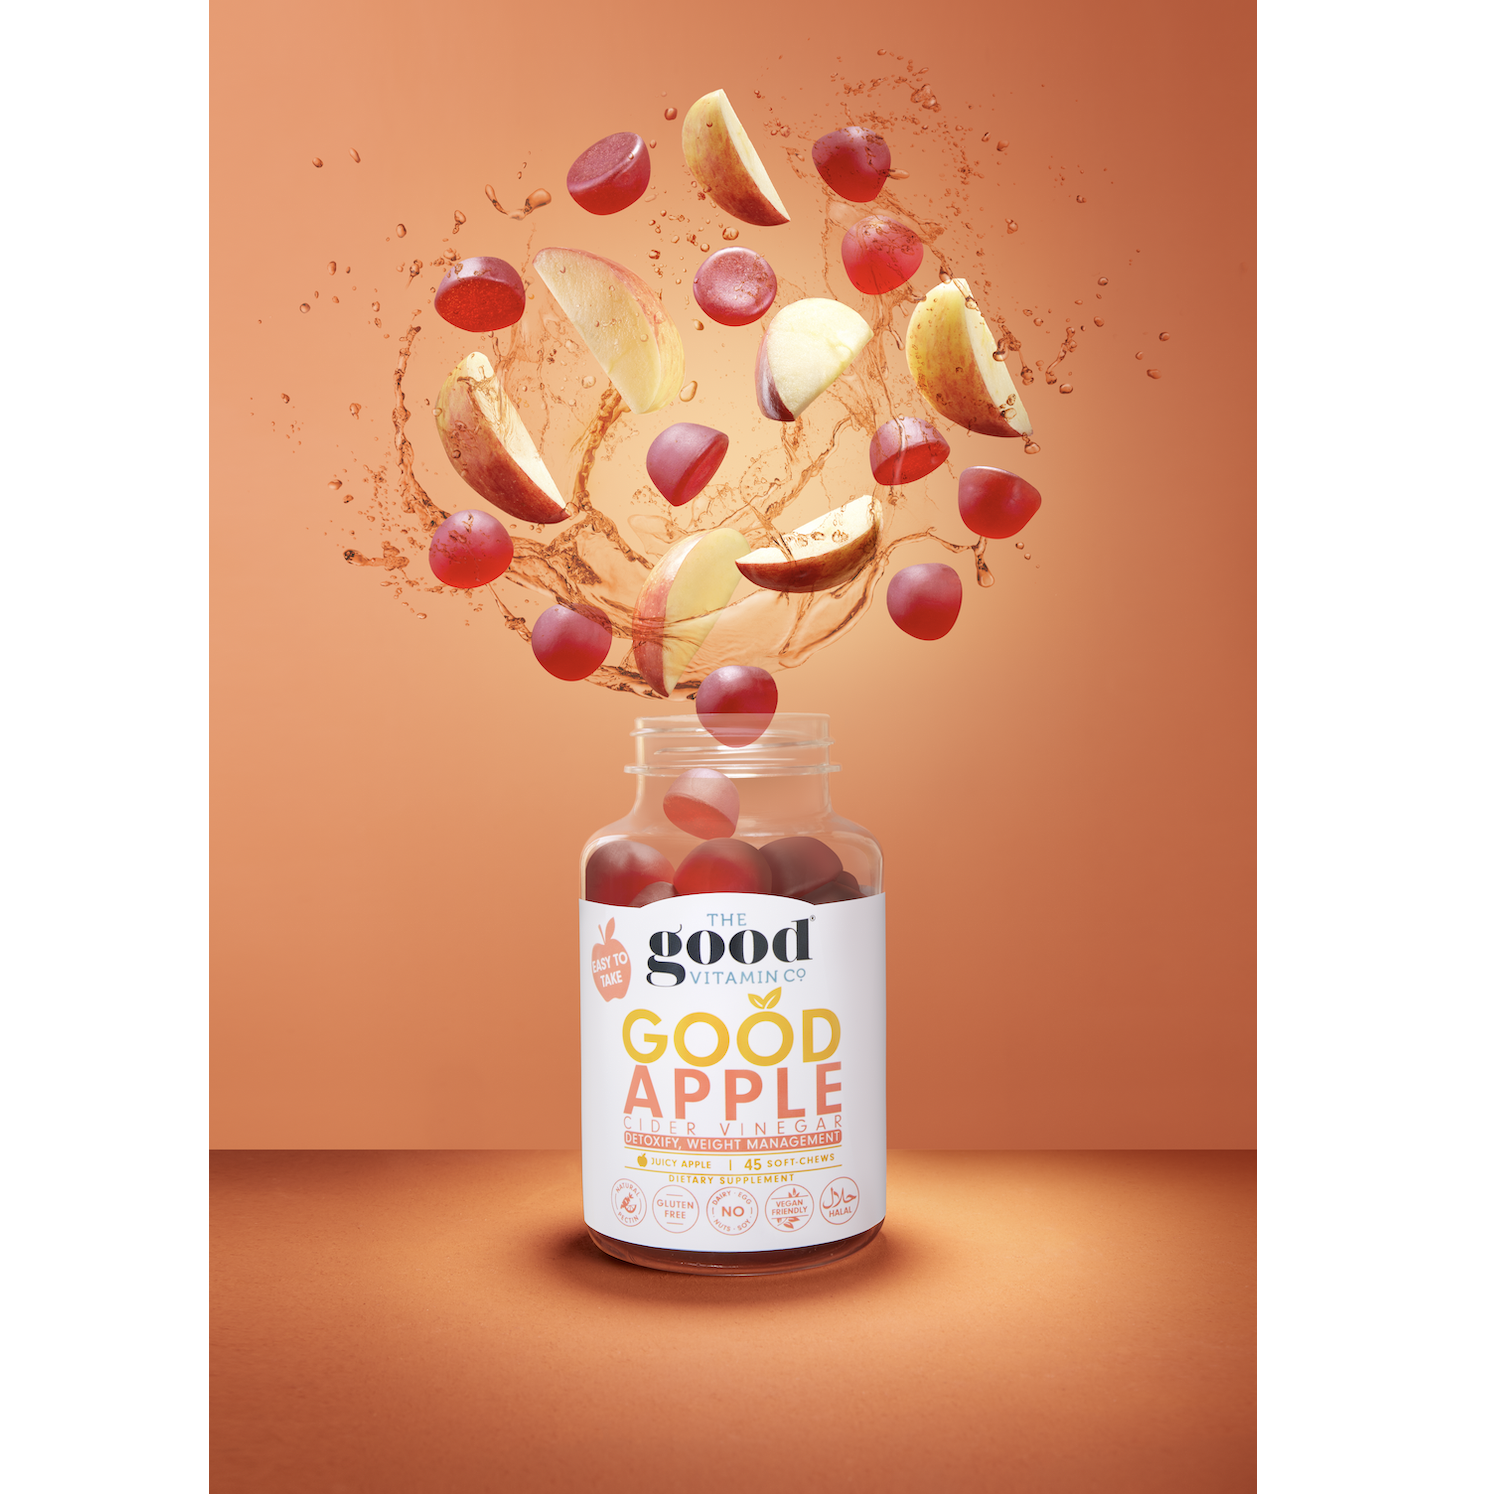 THE GOOD VITAMIN CO Good Apple Cider Vinegar Supplements